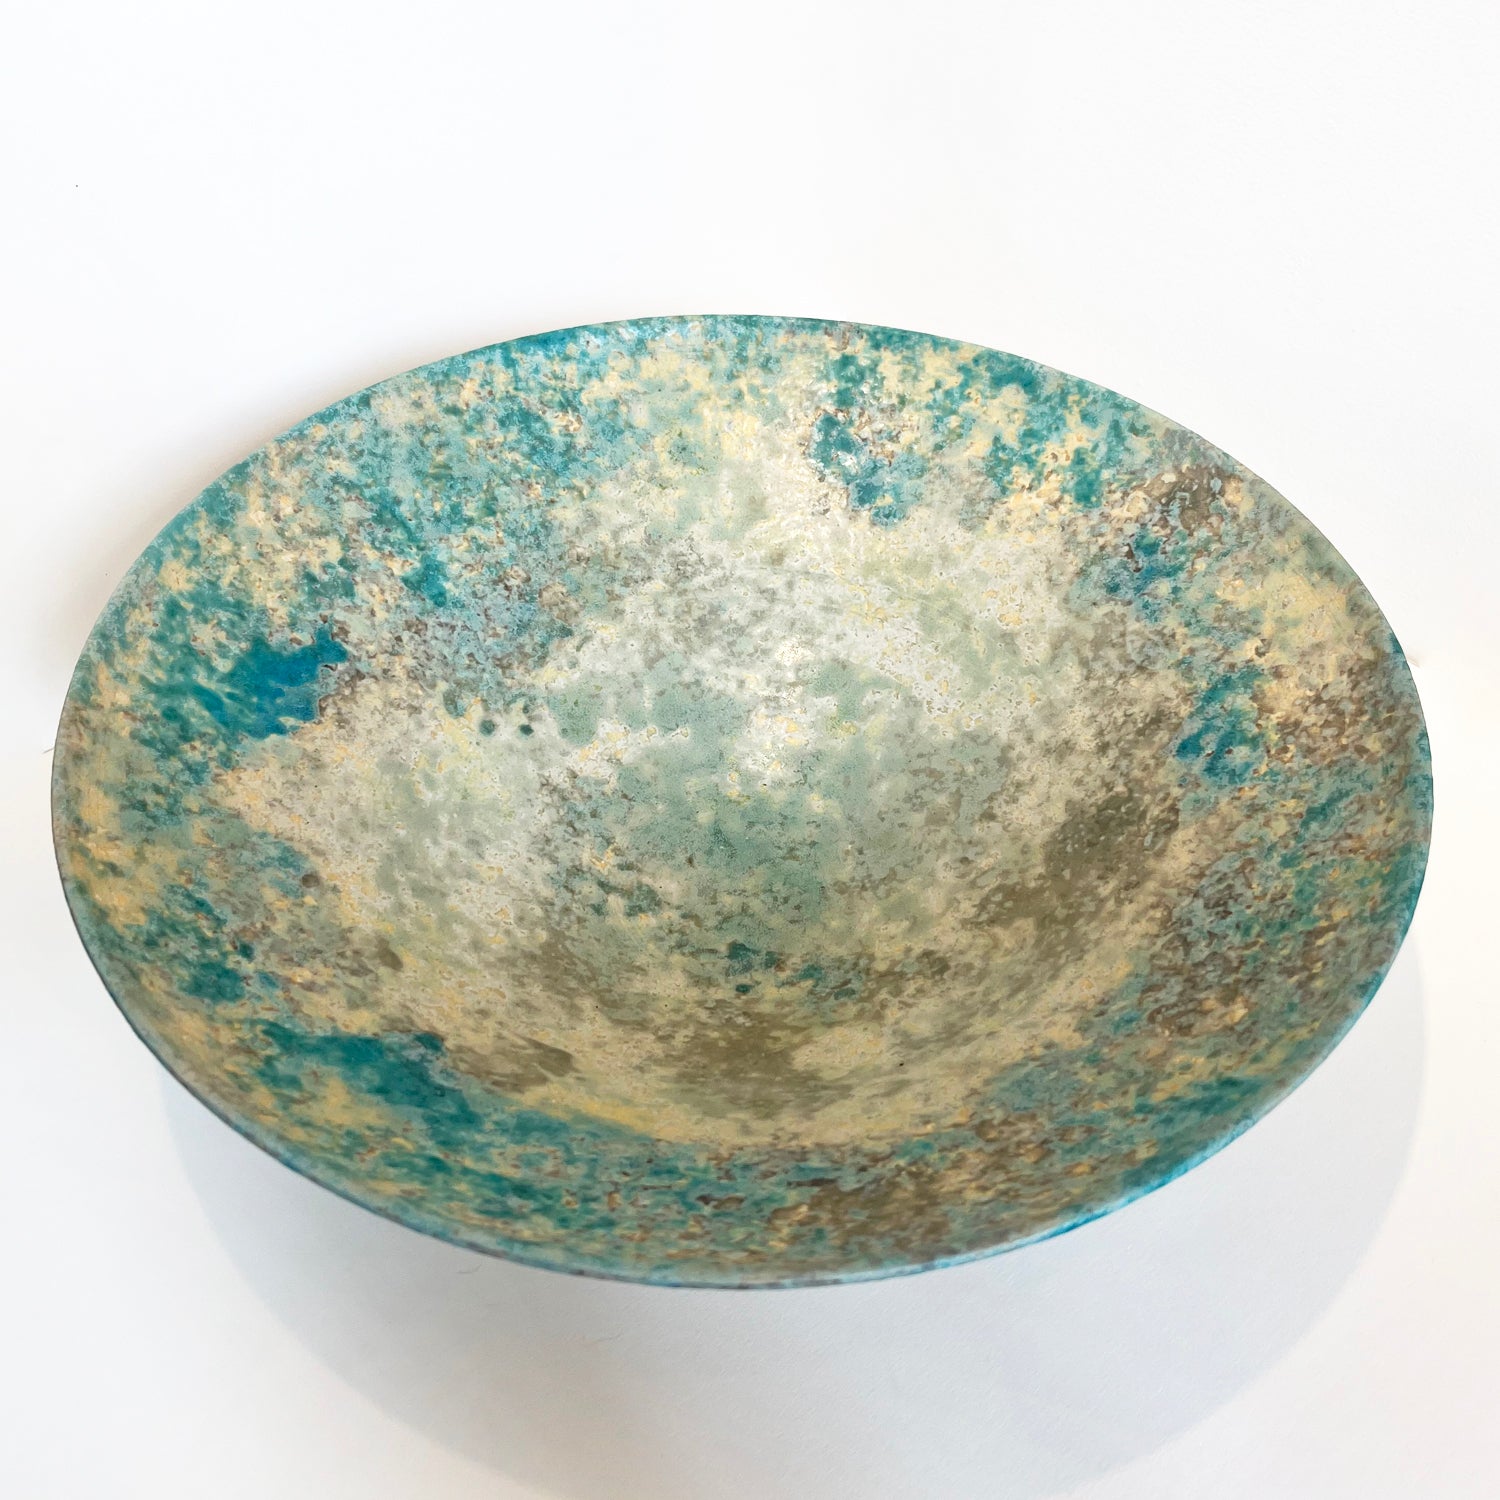 Makiko Hicher - Light Turquoise Bowl, 4.5" x 14" x 14"